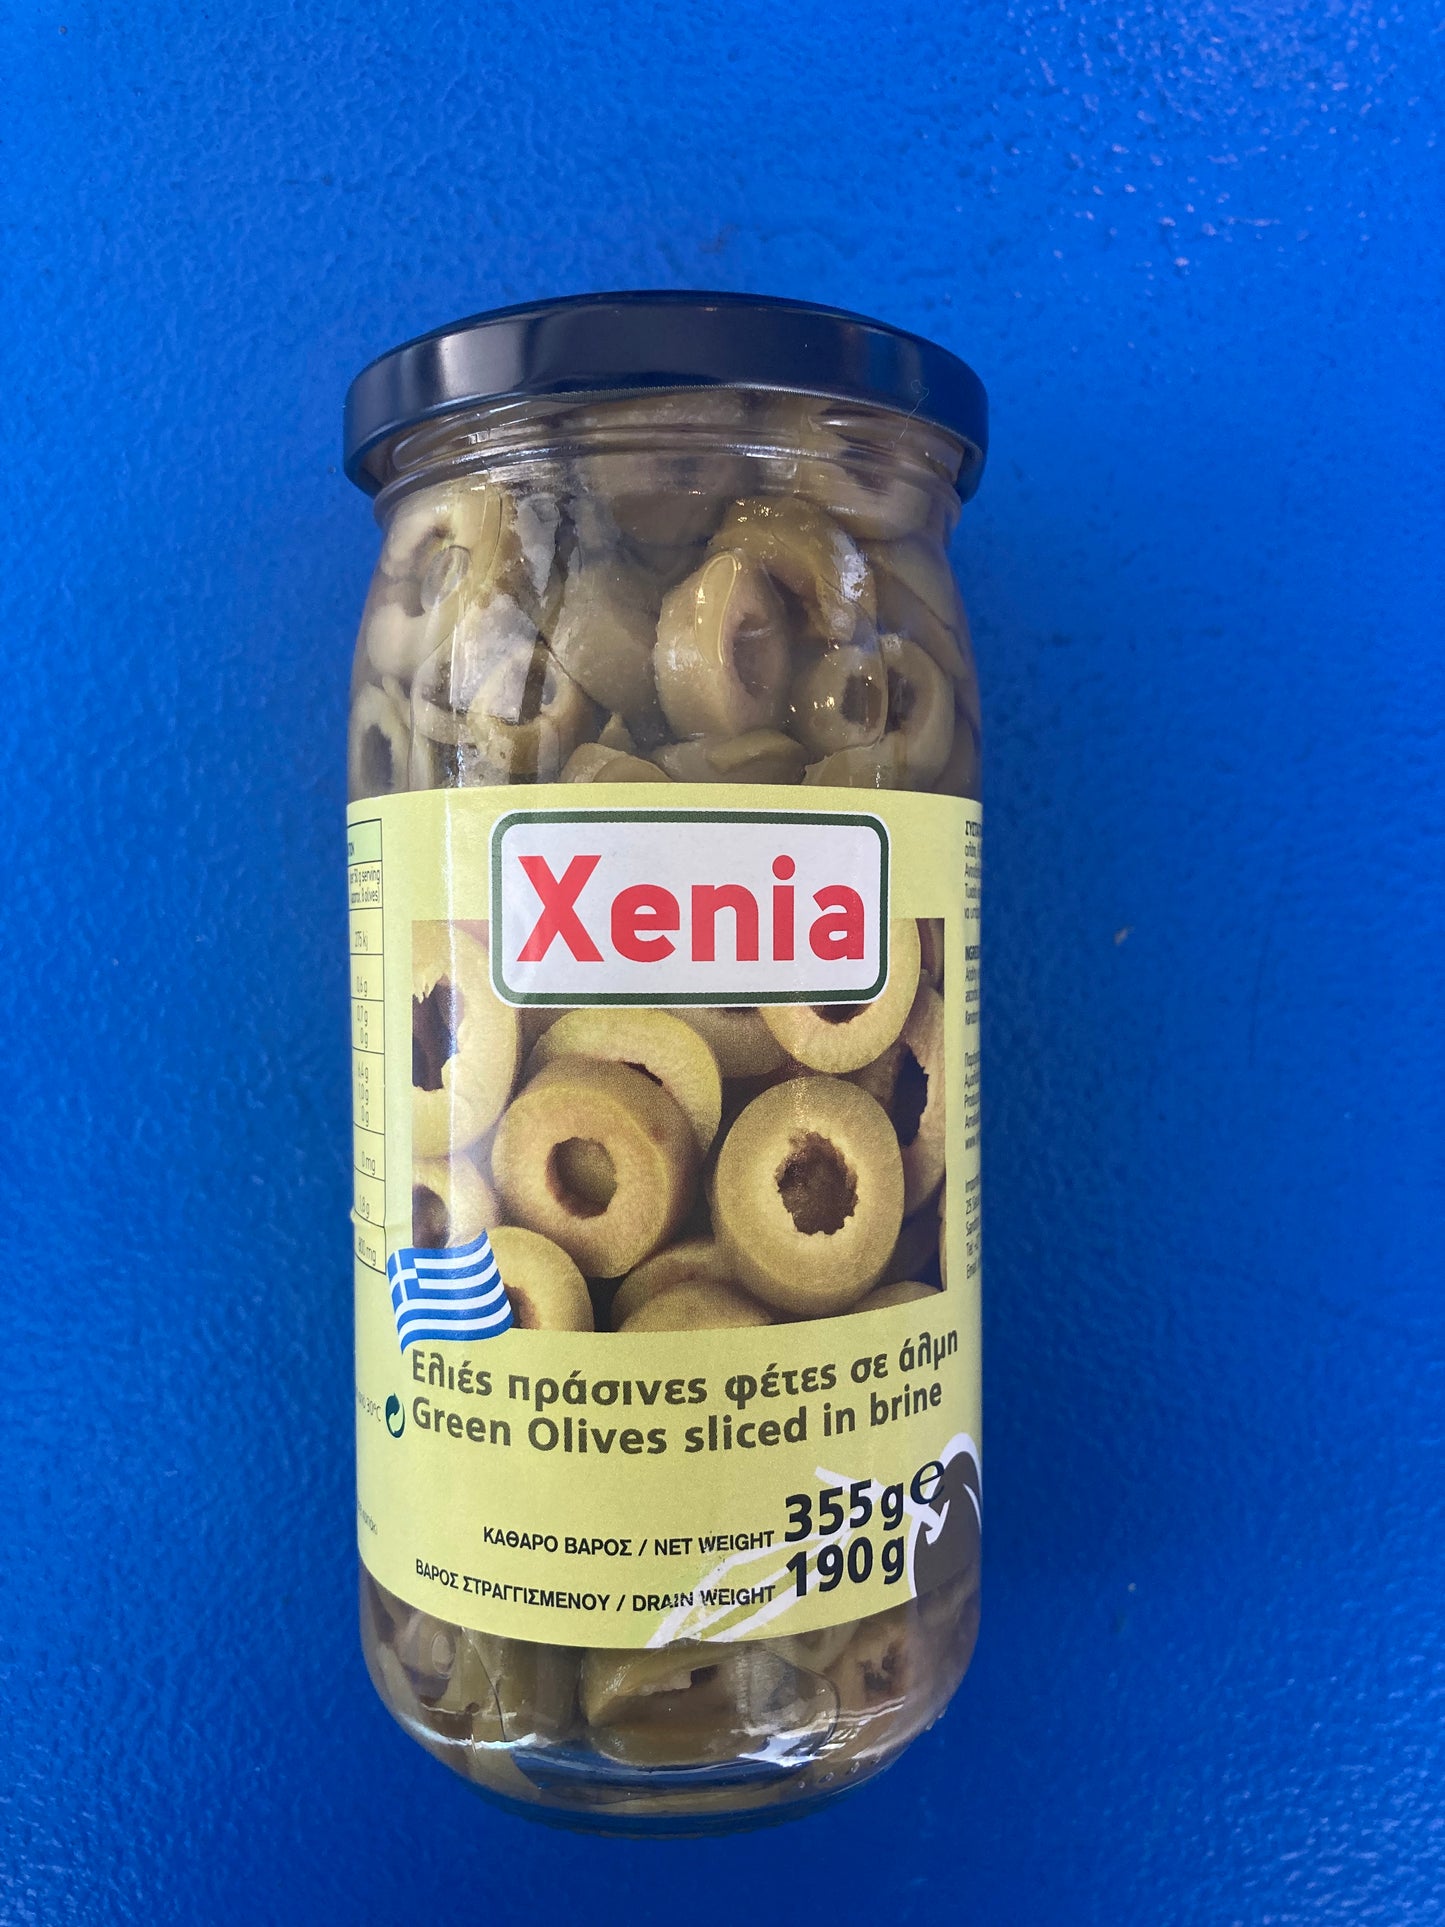 Xenia green olives sliced in brine